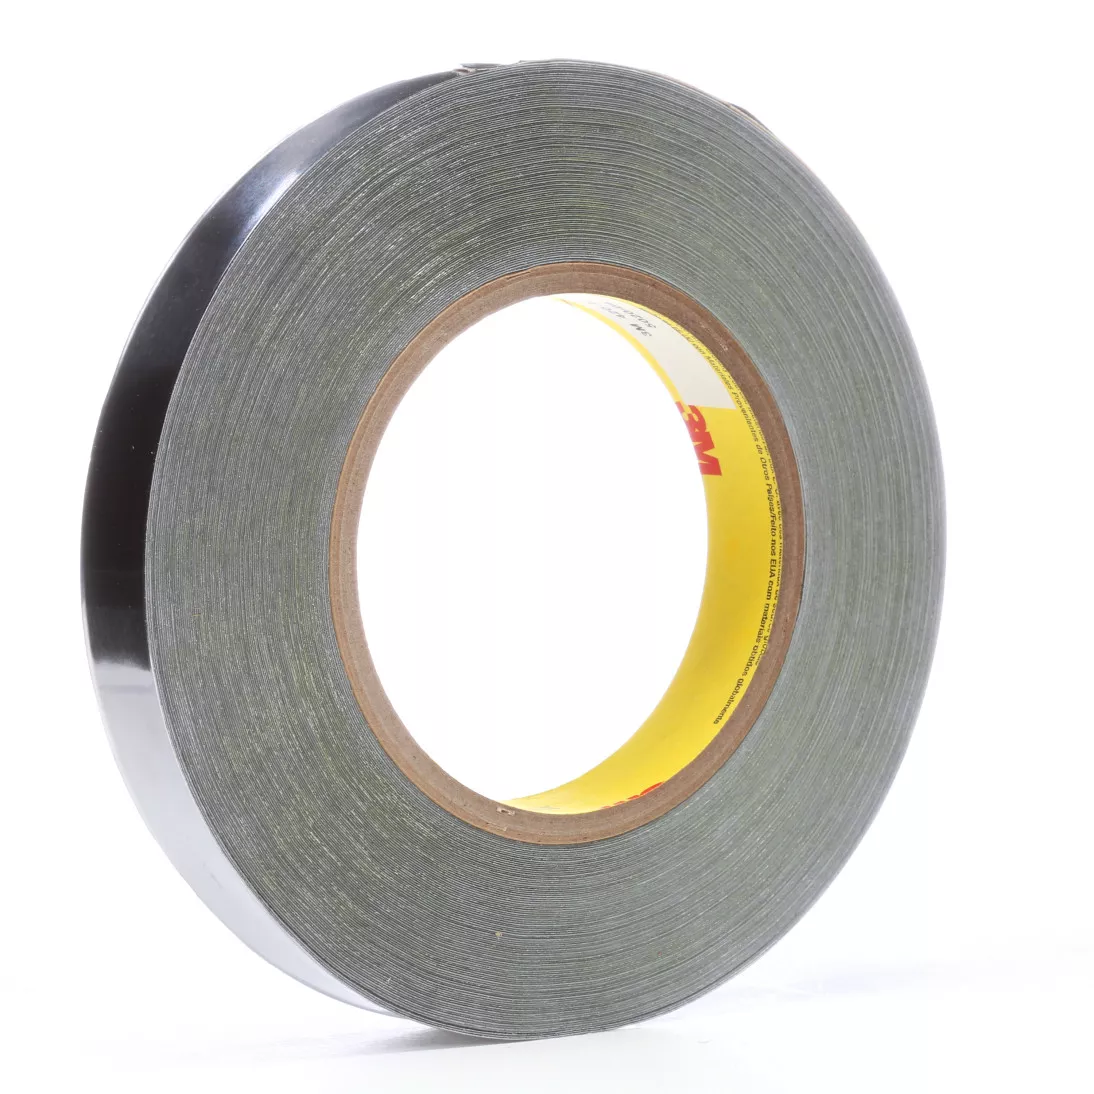 3M™ Lead Foil Tape 420, Dark Silver, 3/4 in x 36 yd, 6.8 mil, 12 rolls
per case